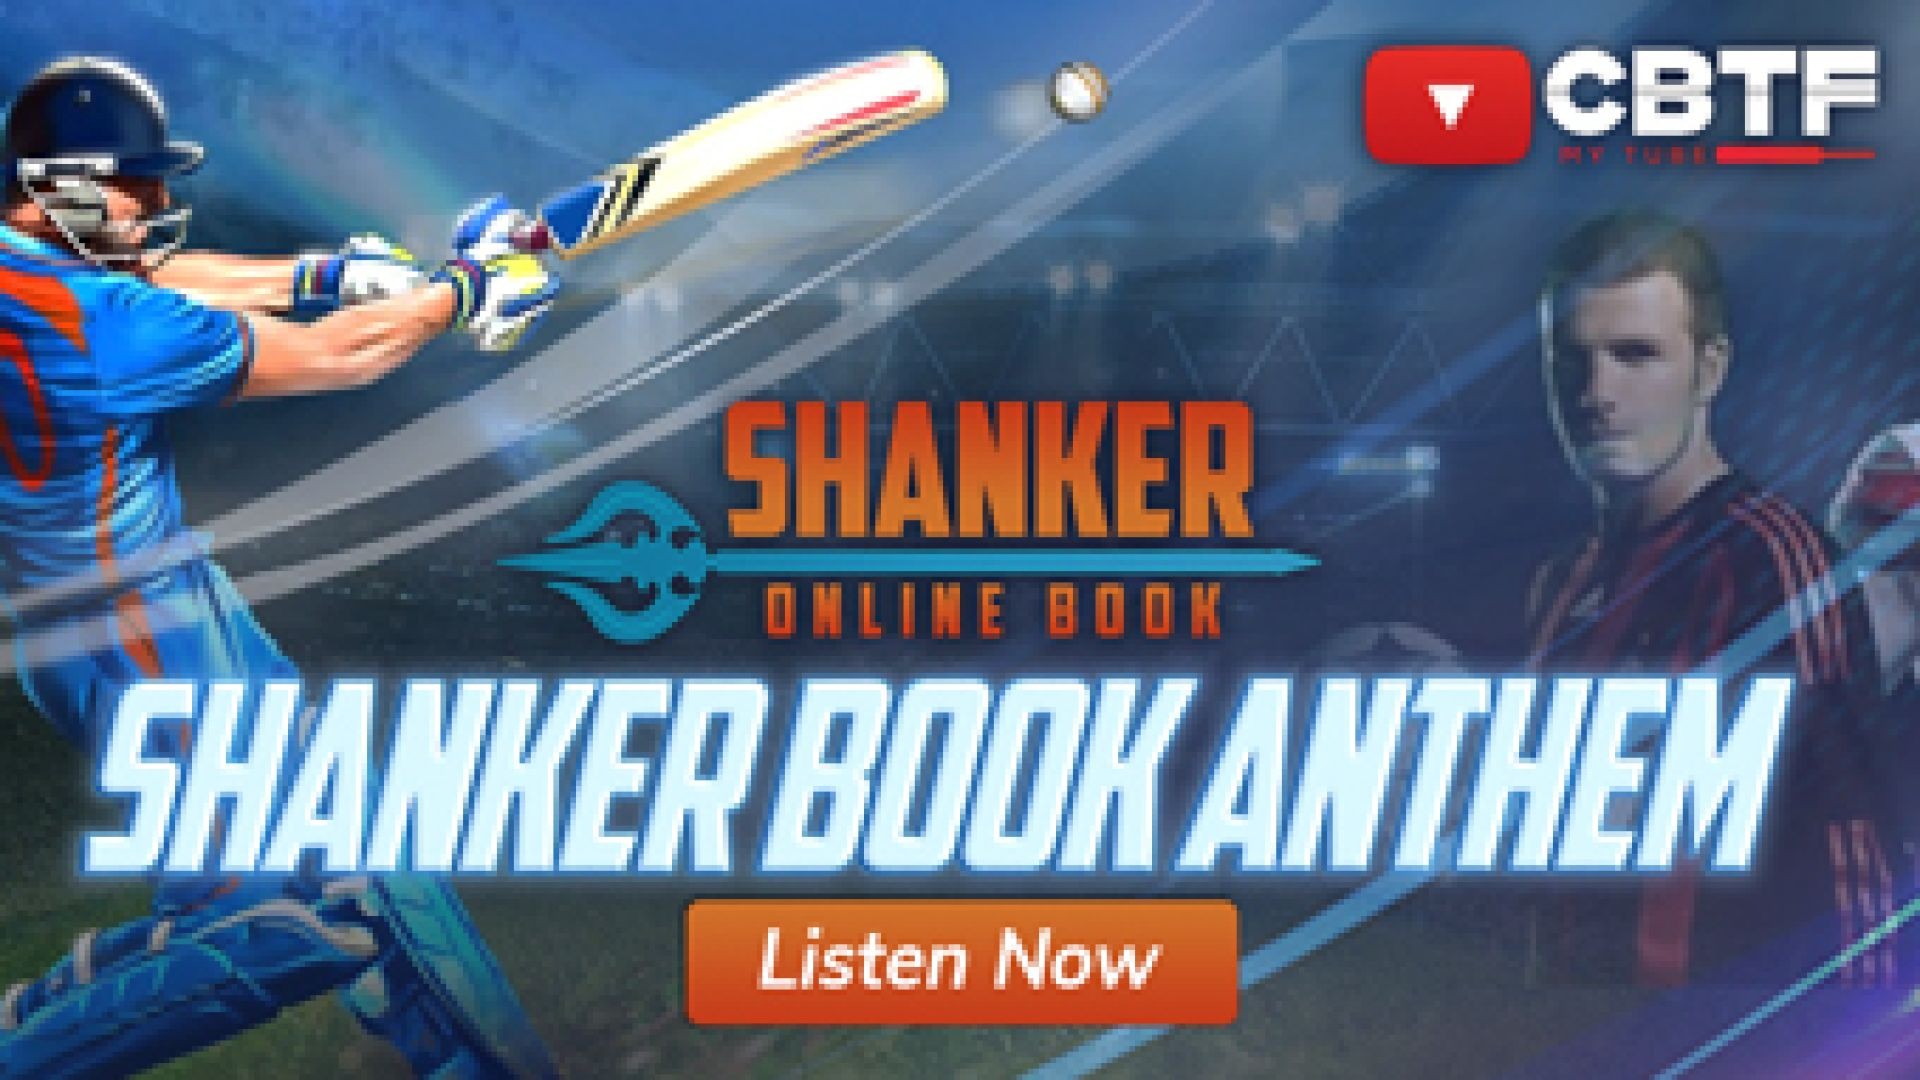 Shanker Anthem - Powered by CBTF